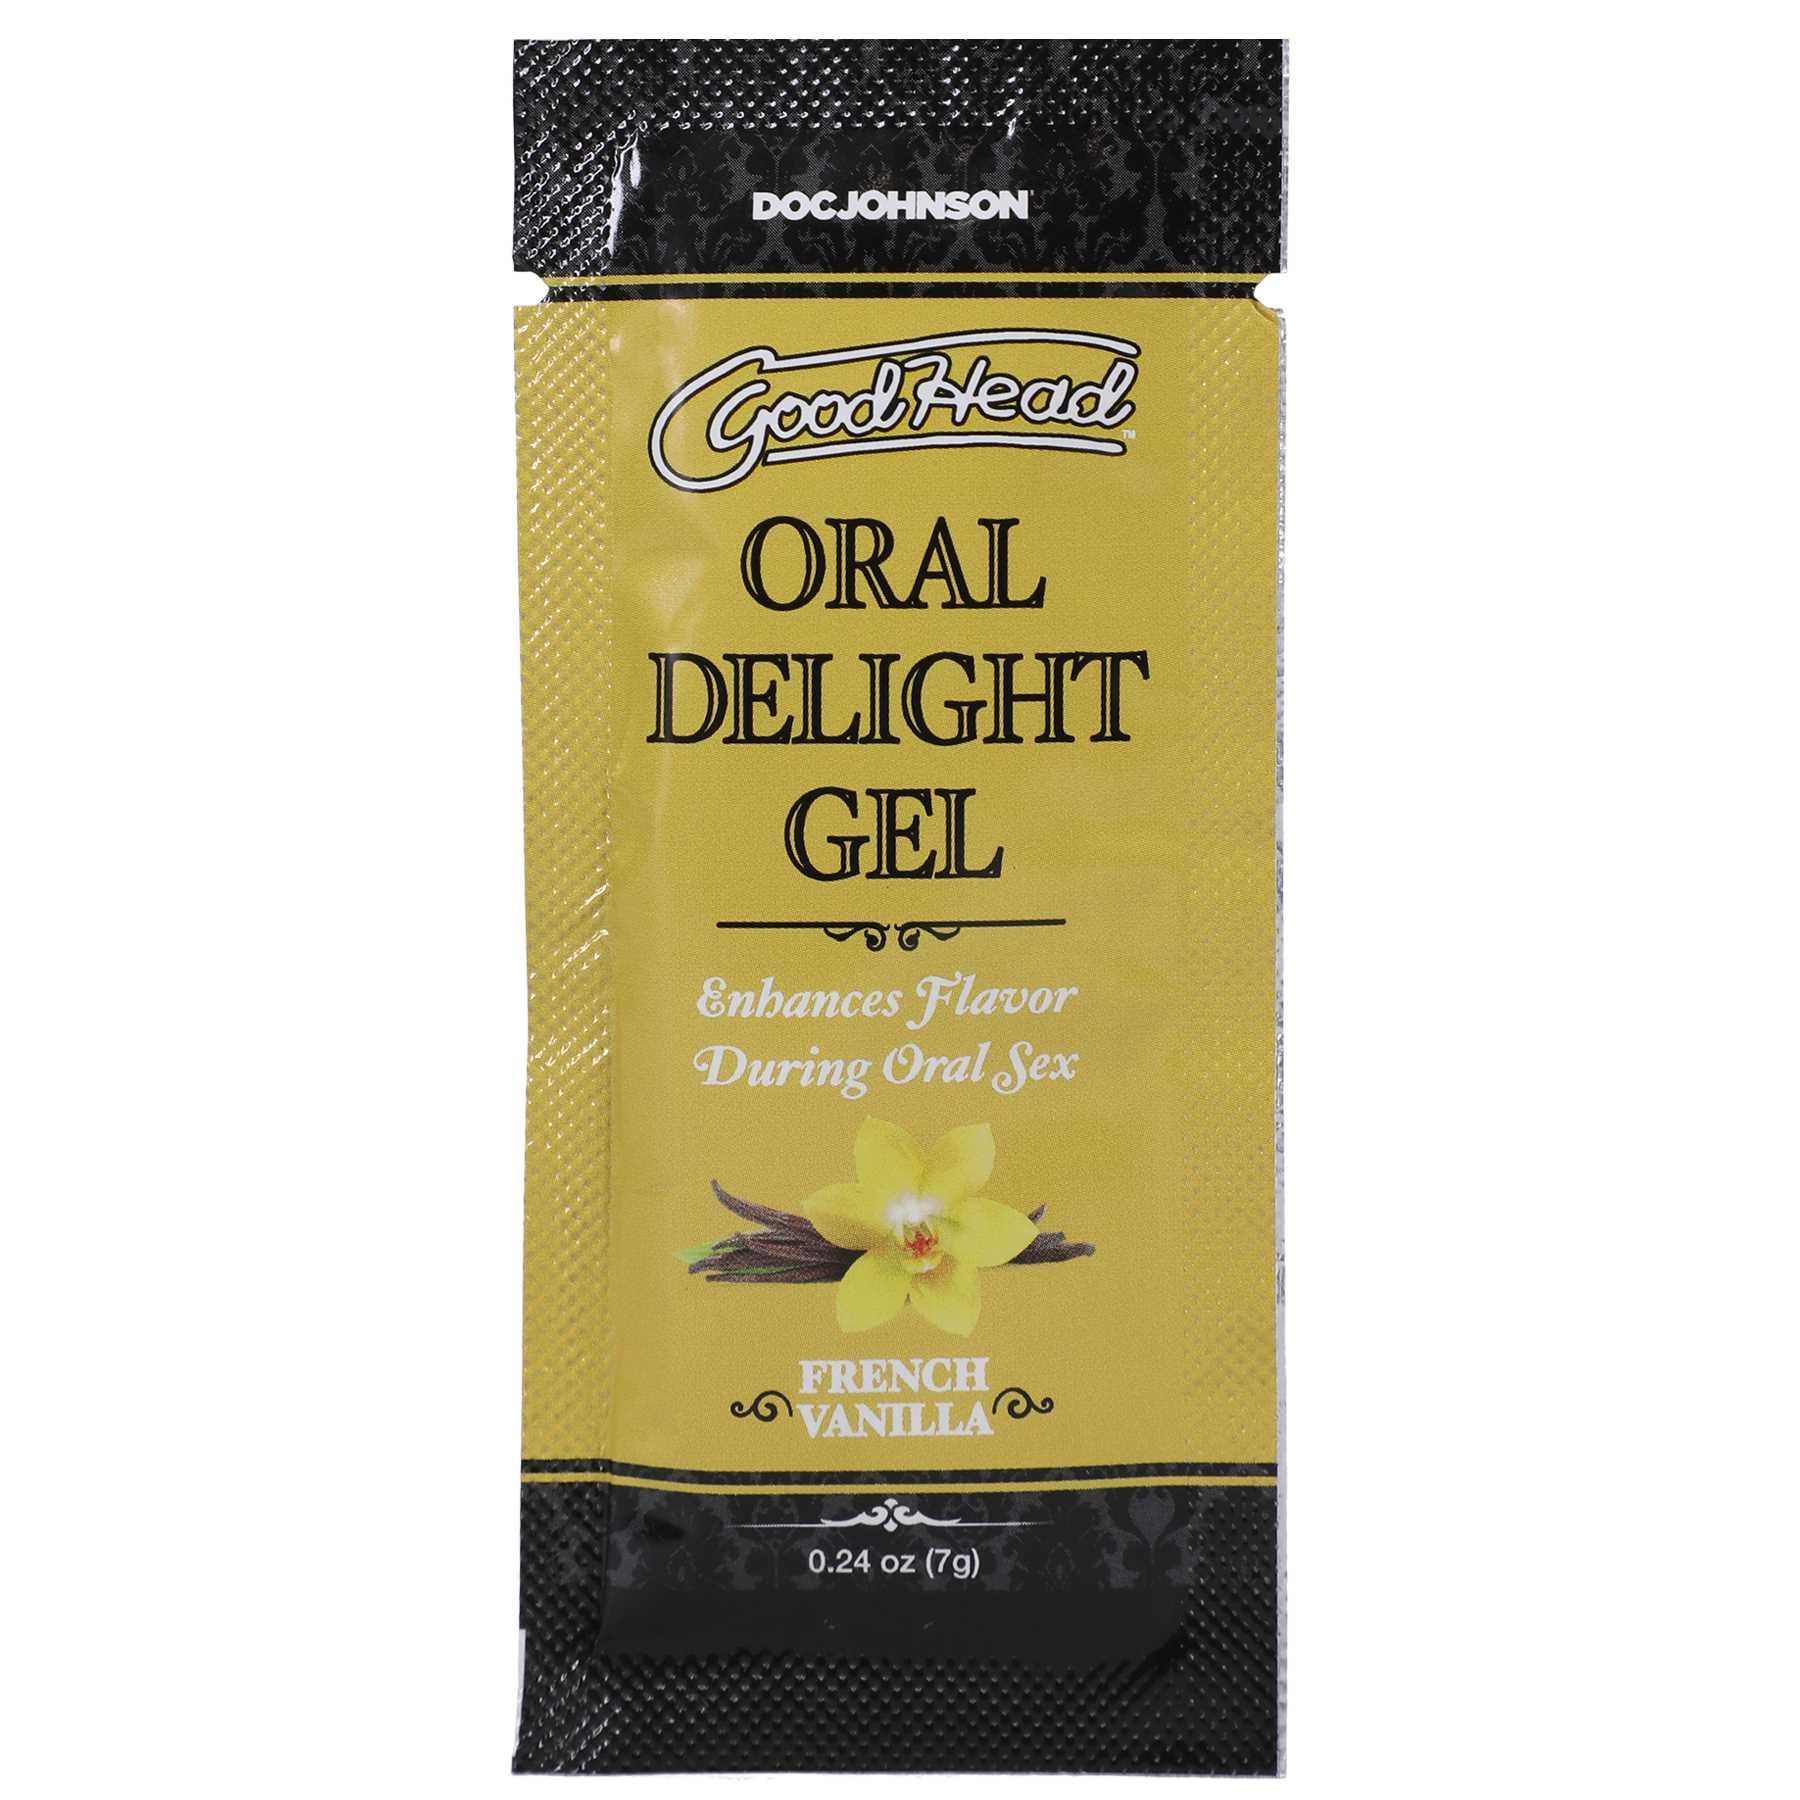 GoodHead - Oral Delight Gel -french vanilla -0.24 oz front